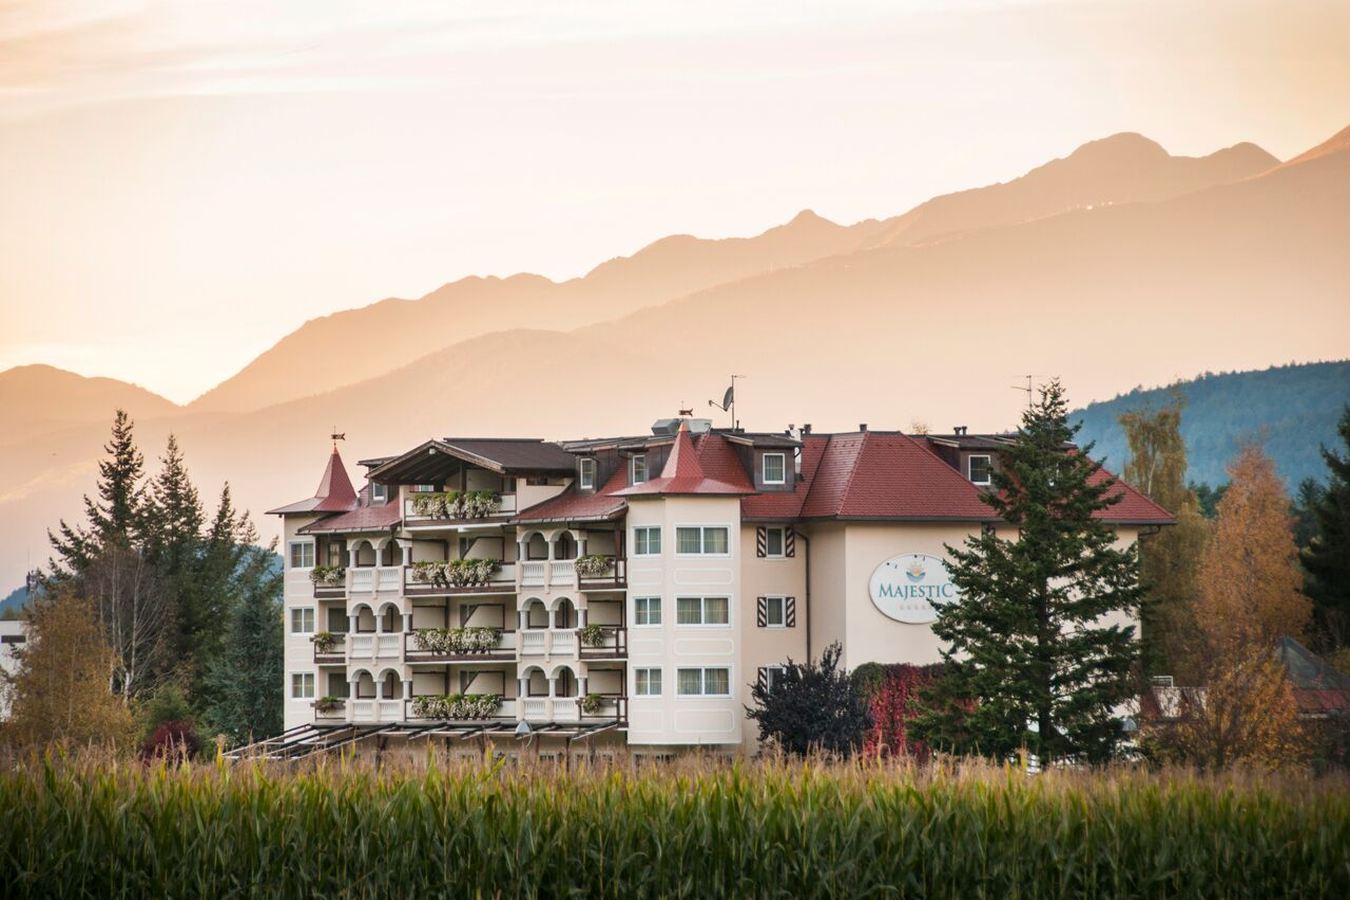 Majestic Hotel & Spa Resort Brunico, South Tyrol - Italy